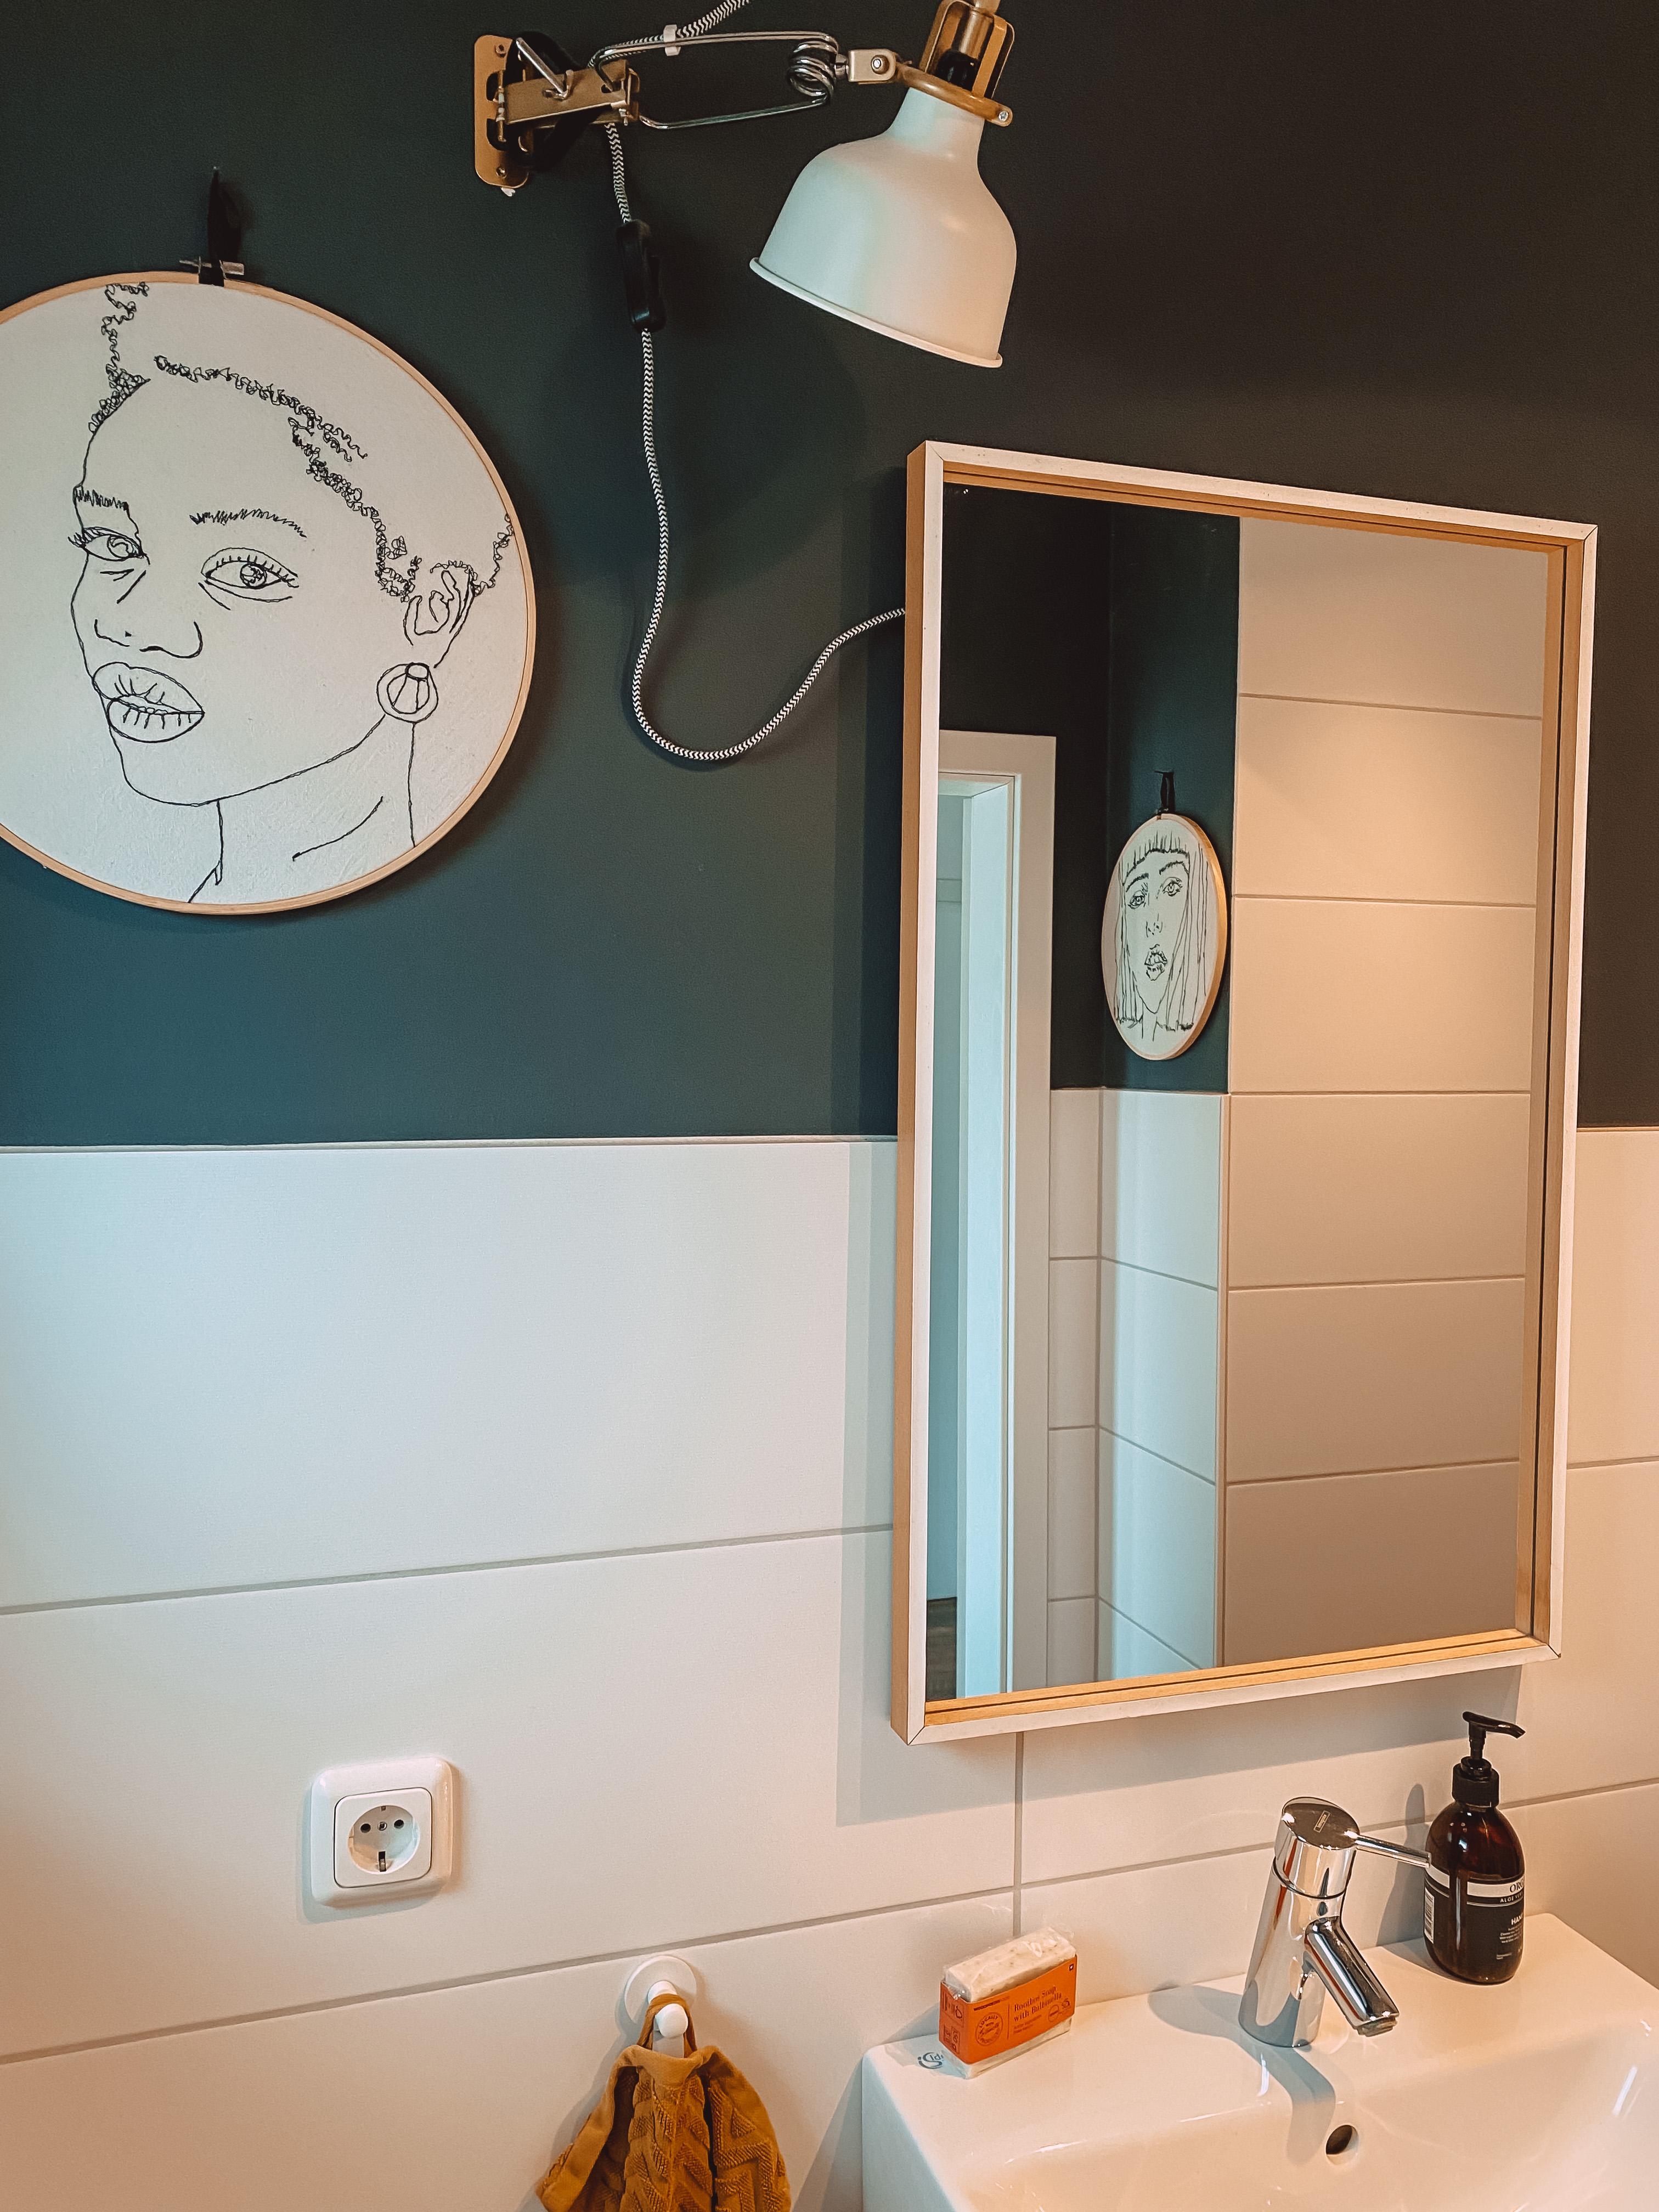 Guest bathroom vibes 🚽 #guestebad #kunstimbad #couchstyle #schwarzweiss #interiorlove